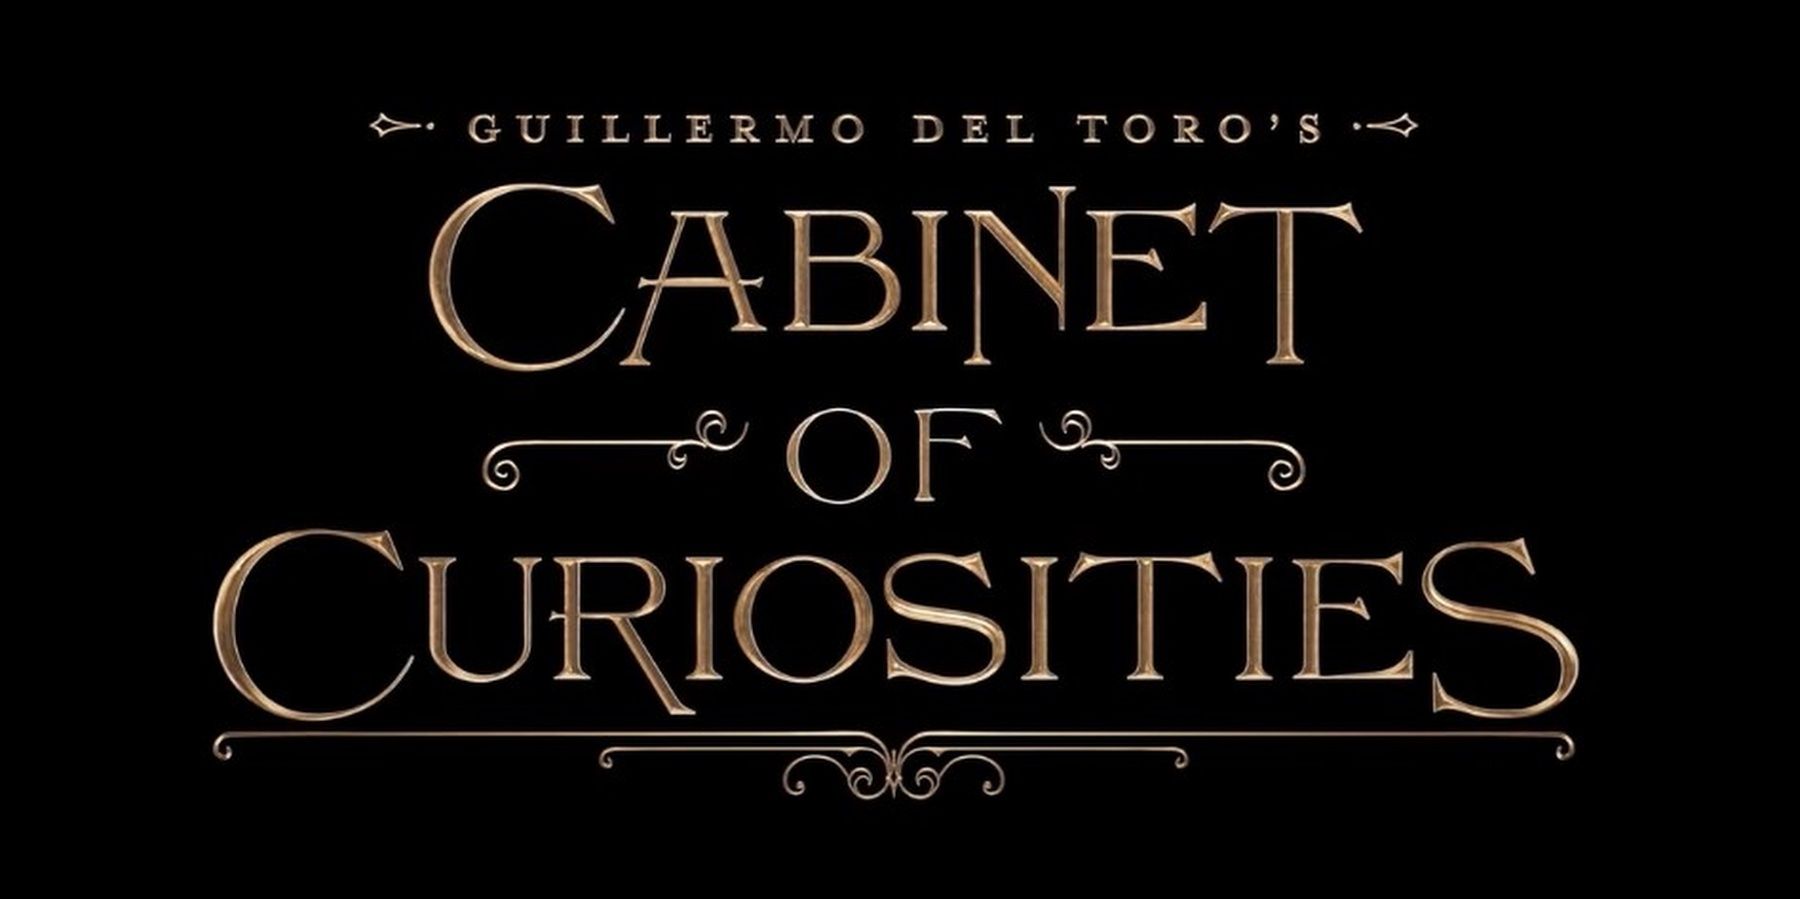 Guillermo-del-toro-cabinet-of-curiosities